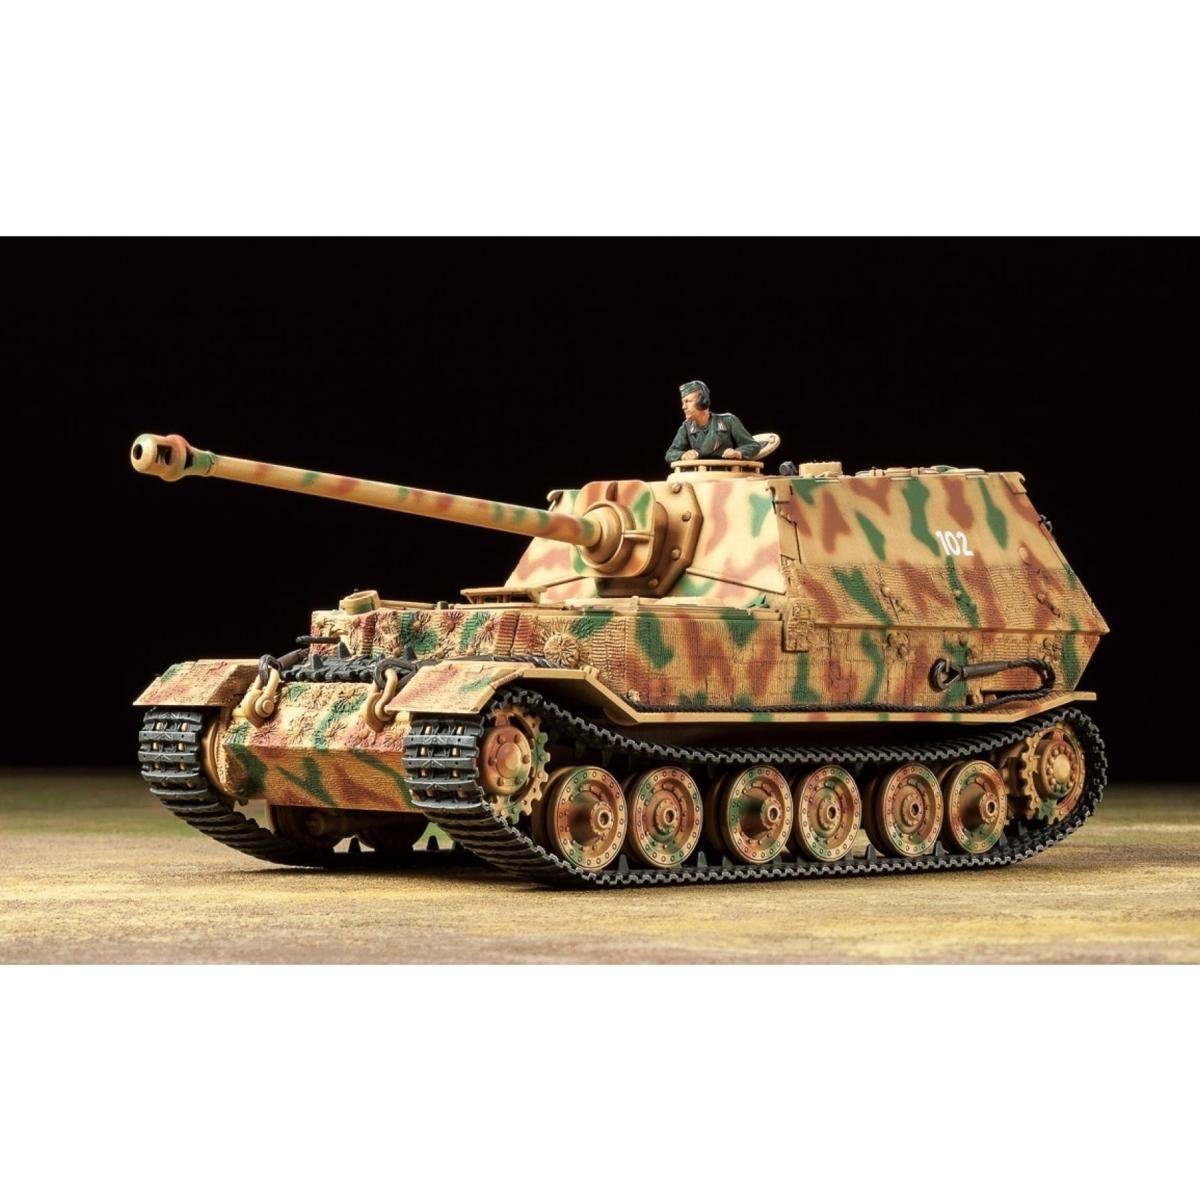 Tamiya Modellbausatz 300032589 - Modellbausatz, 1:48 Jagdpanzer Elefant